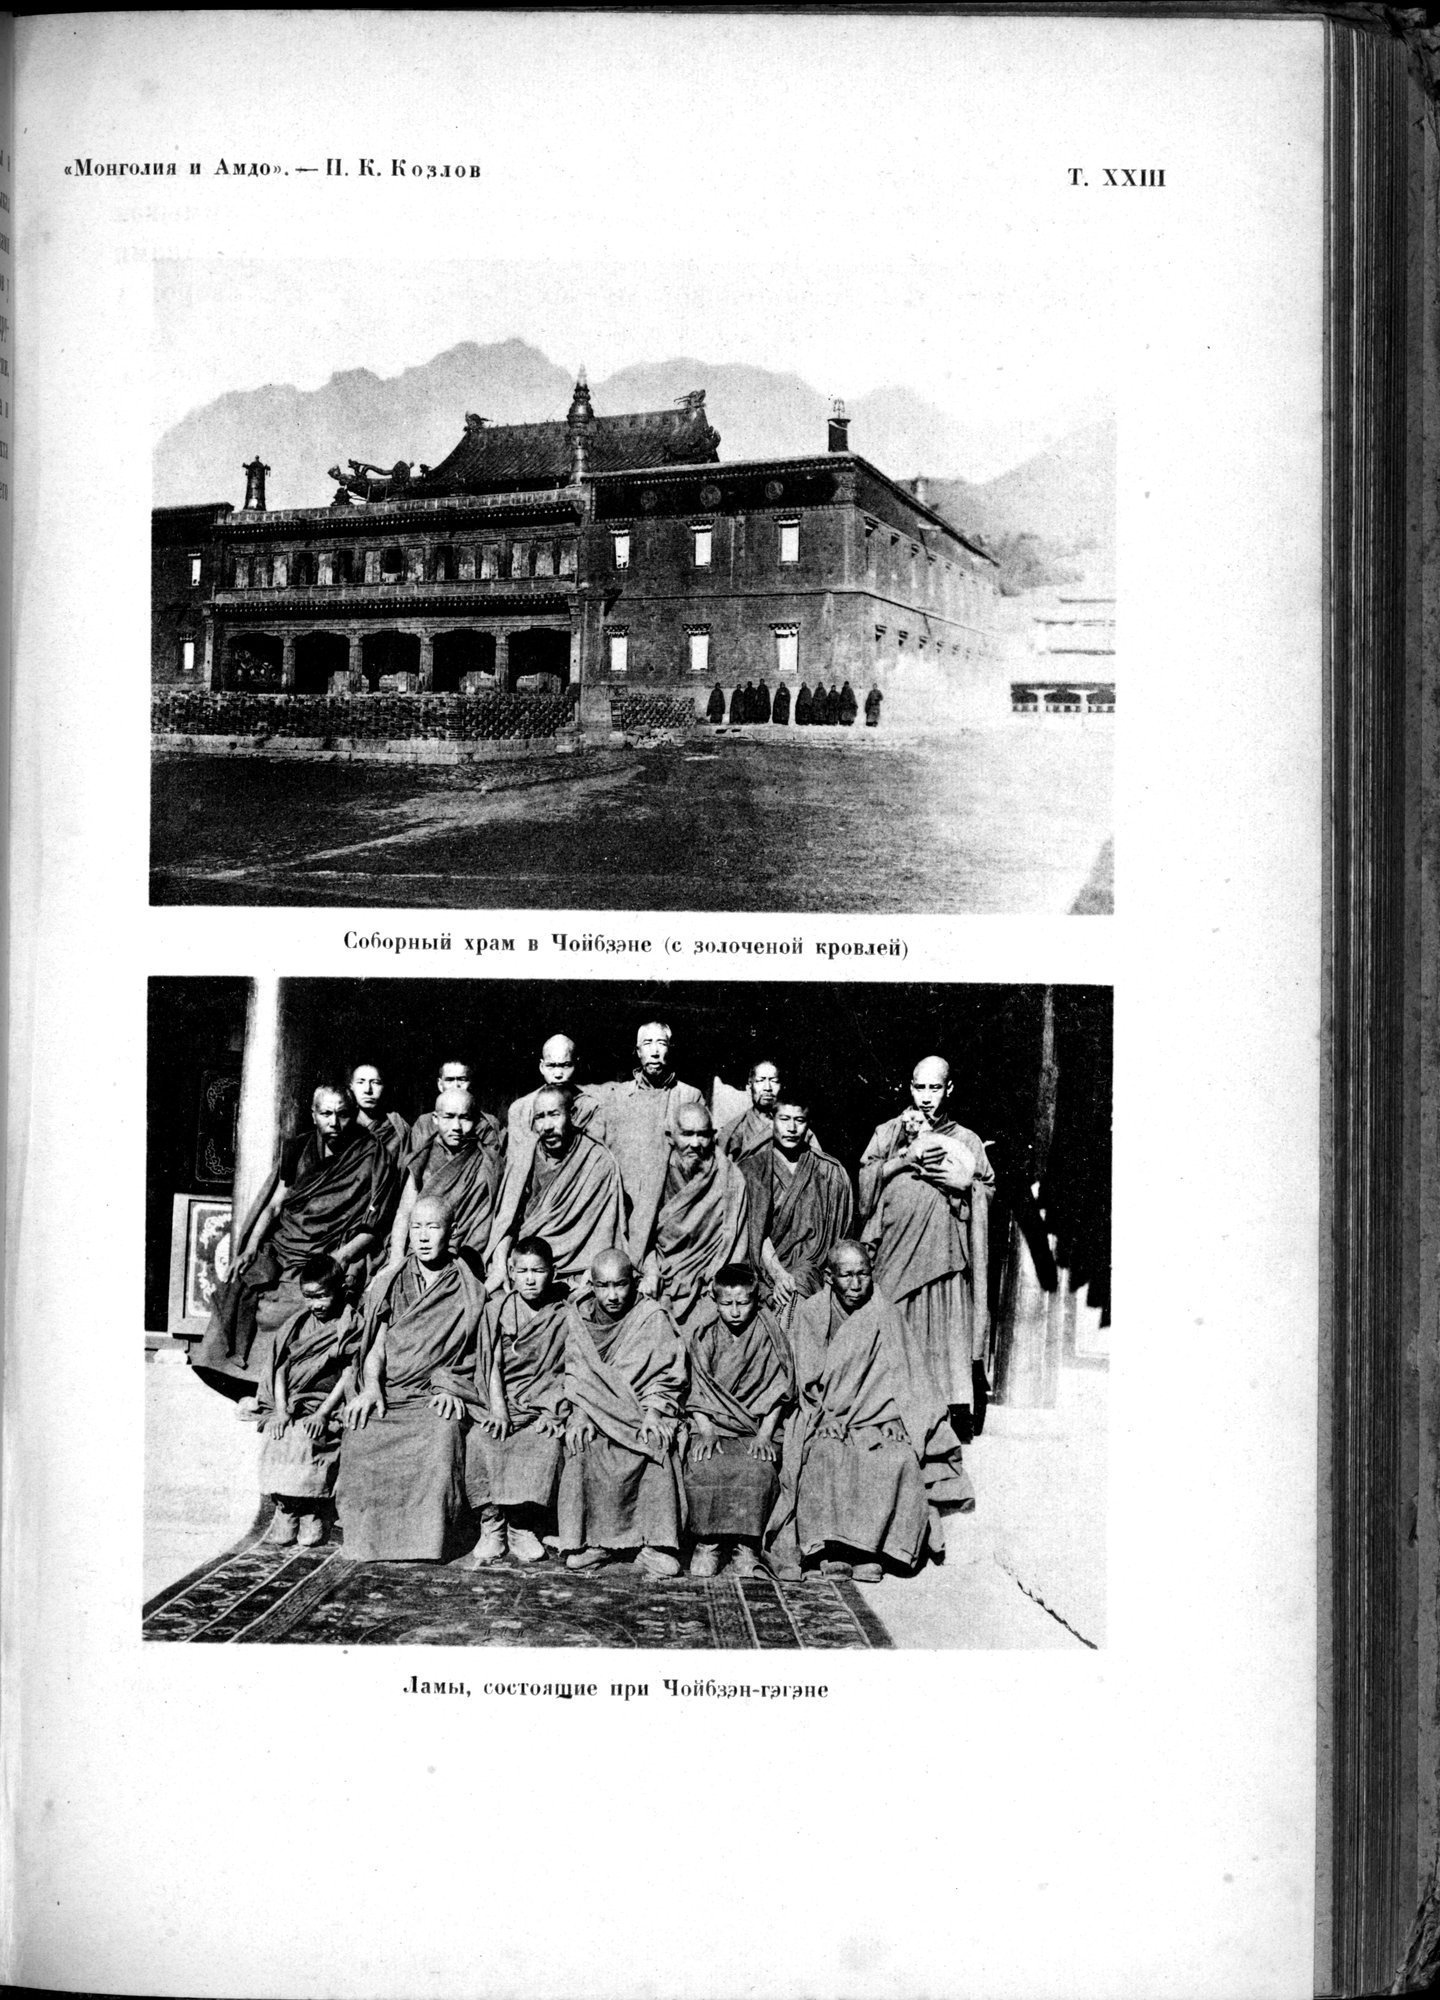 Mongoliya i Amdo i mertby gorod Khara-Khoto : vol.1 / Page 457 (Grayscale High Resolution Image)